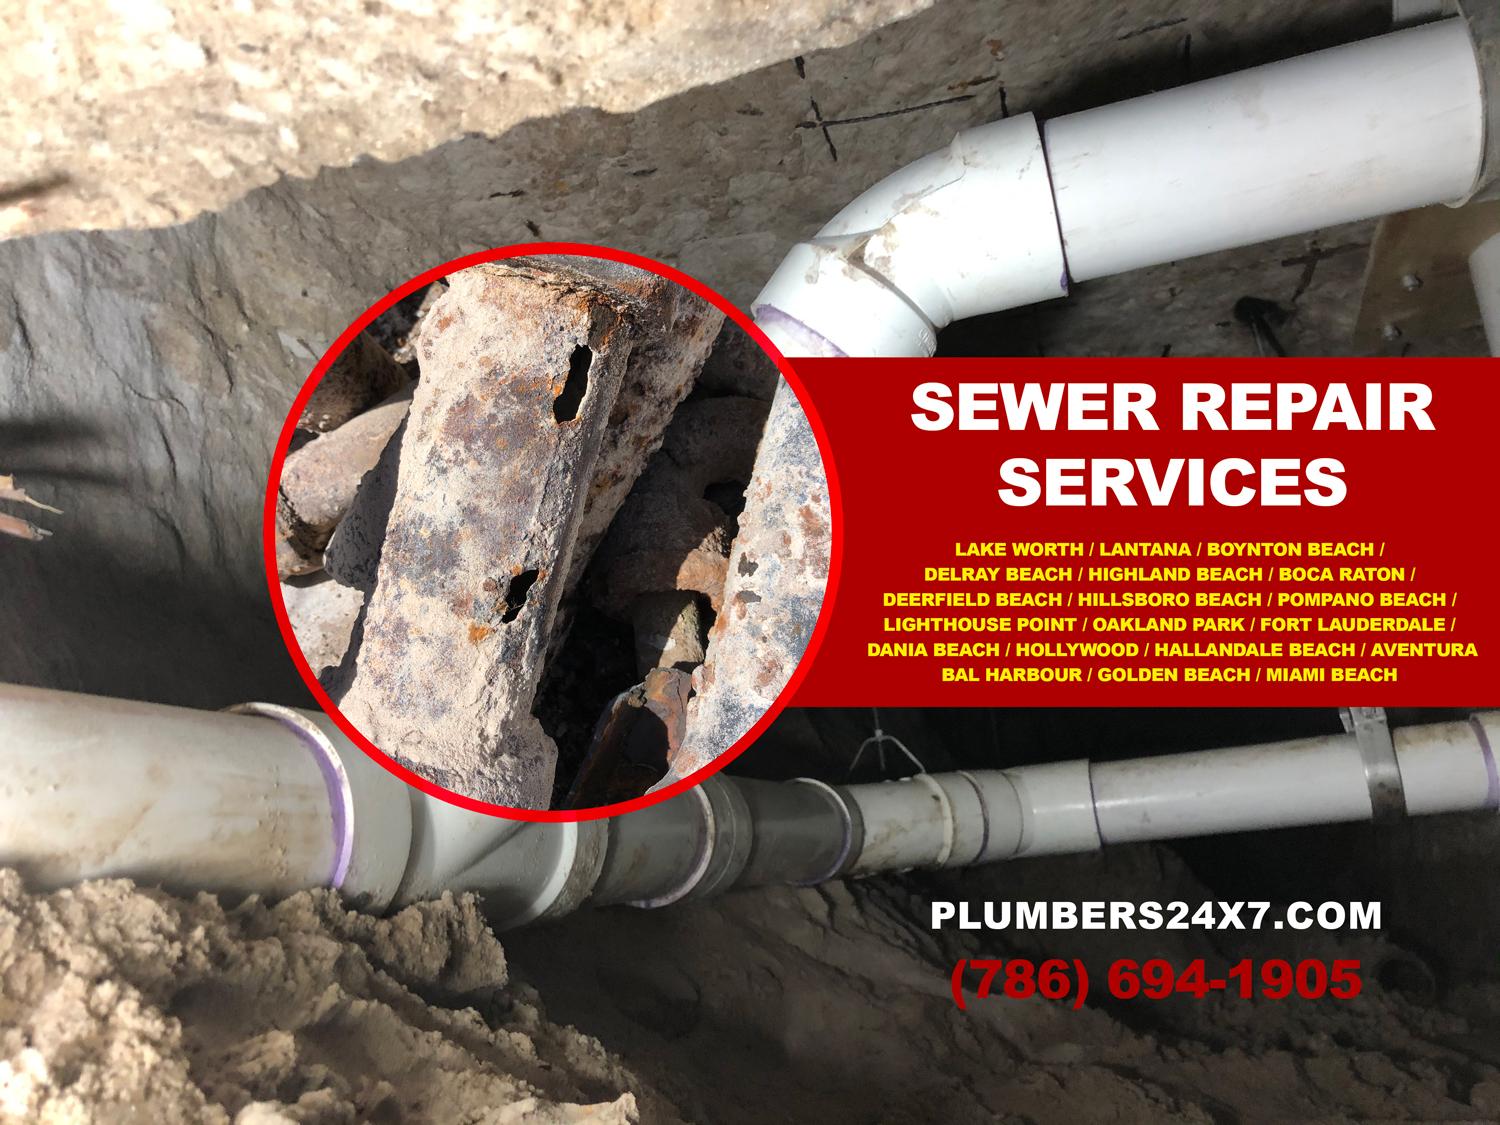 Sewer Repair Services near me